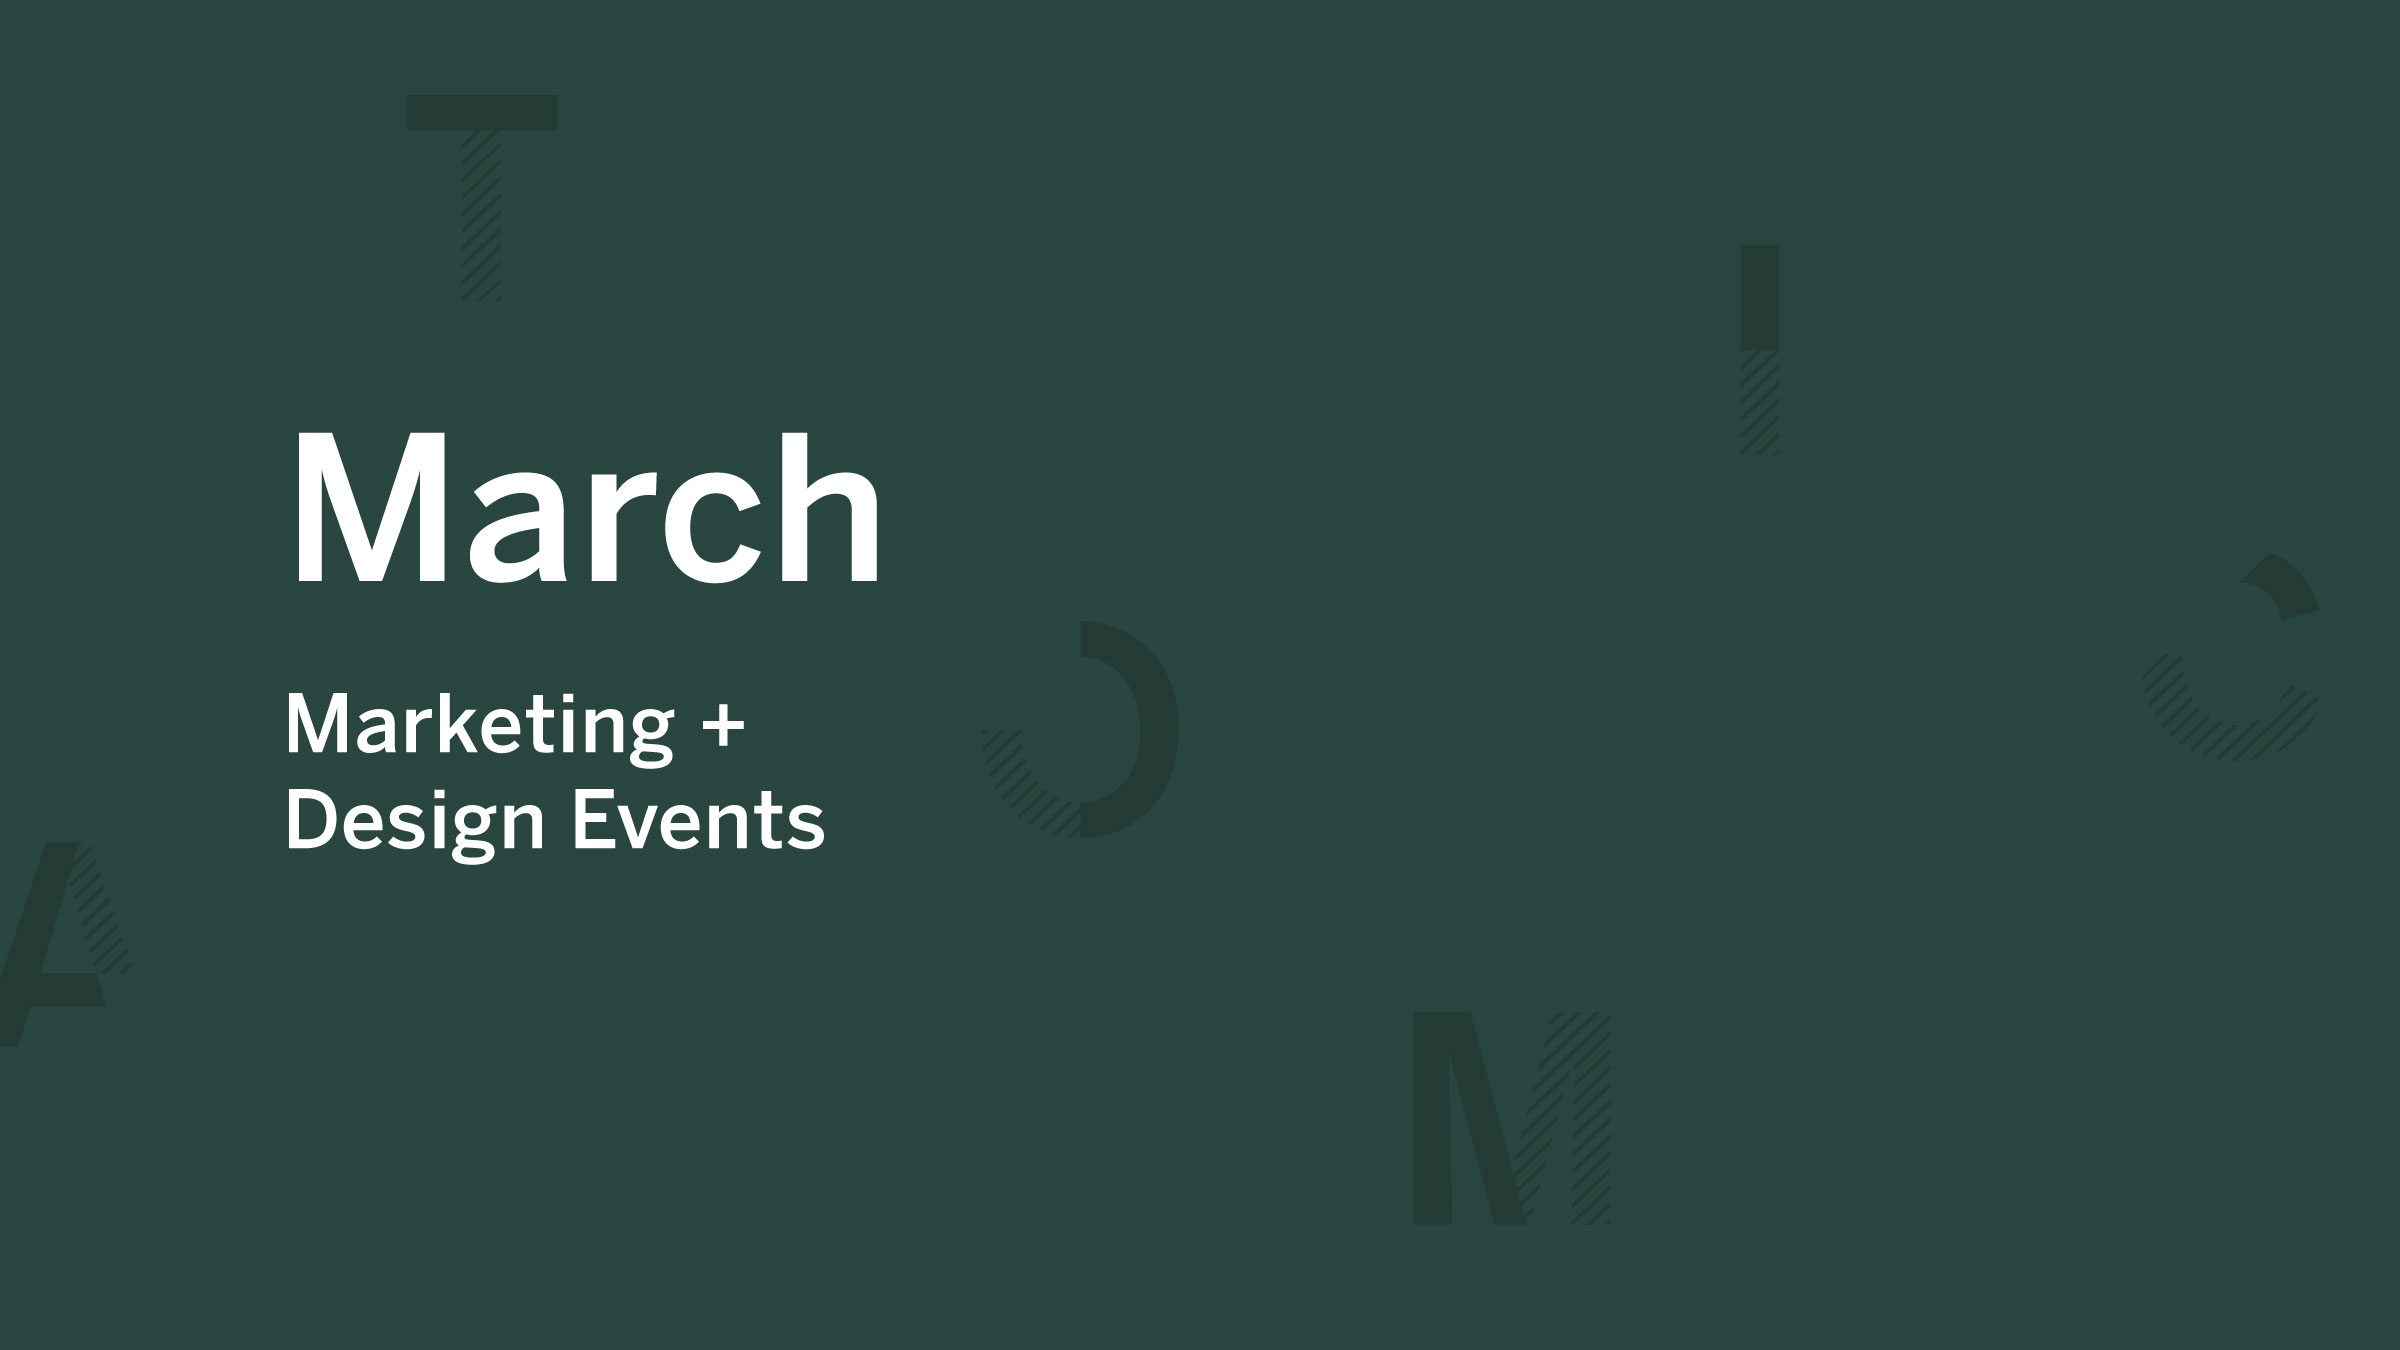 March 2020 Marketing + Design Events